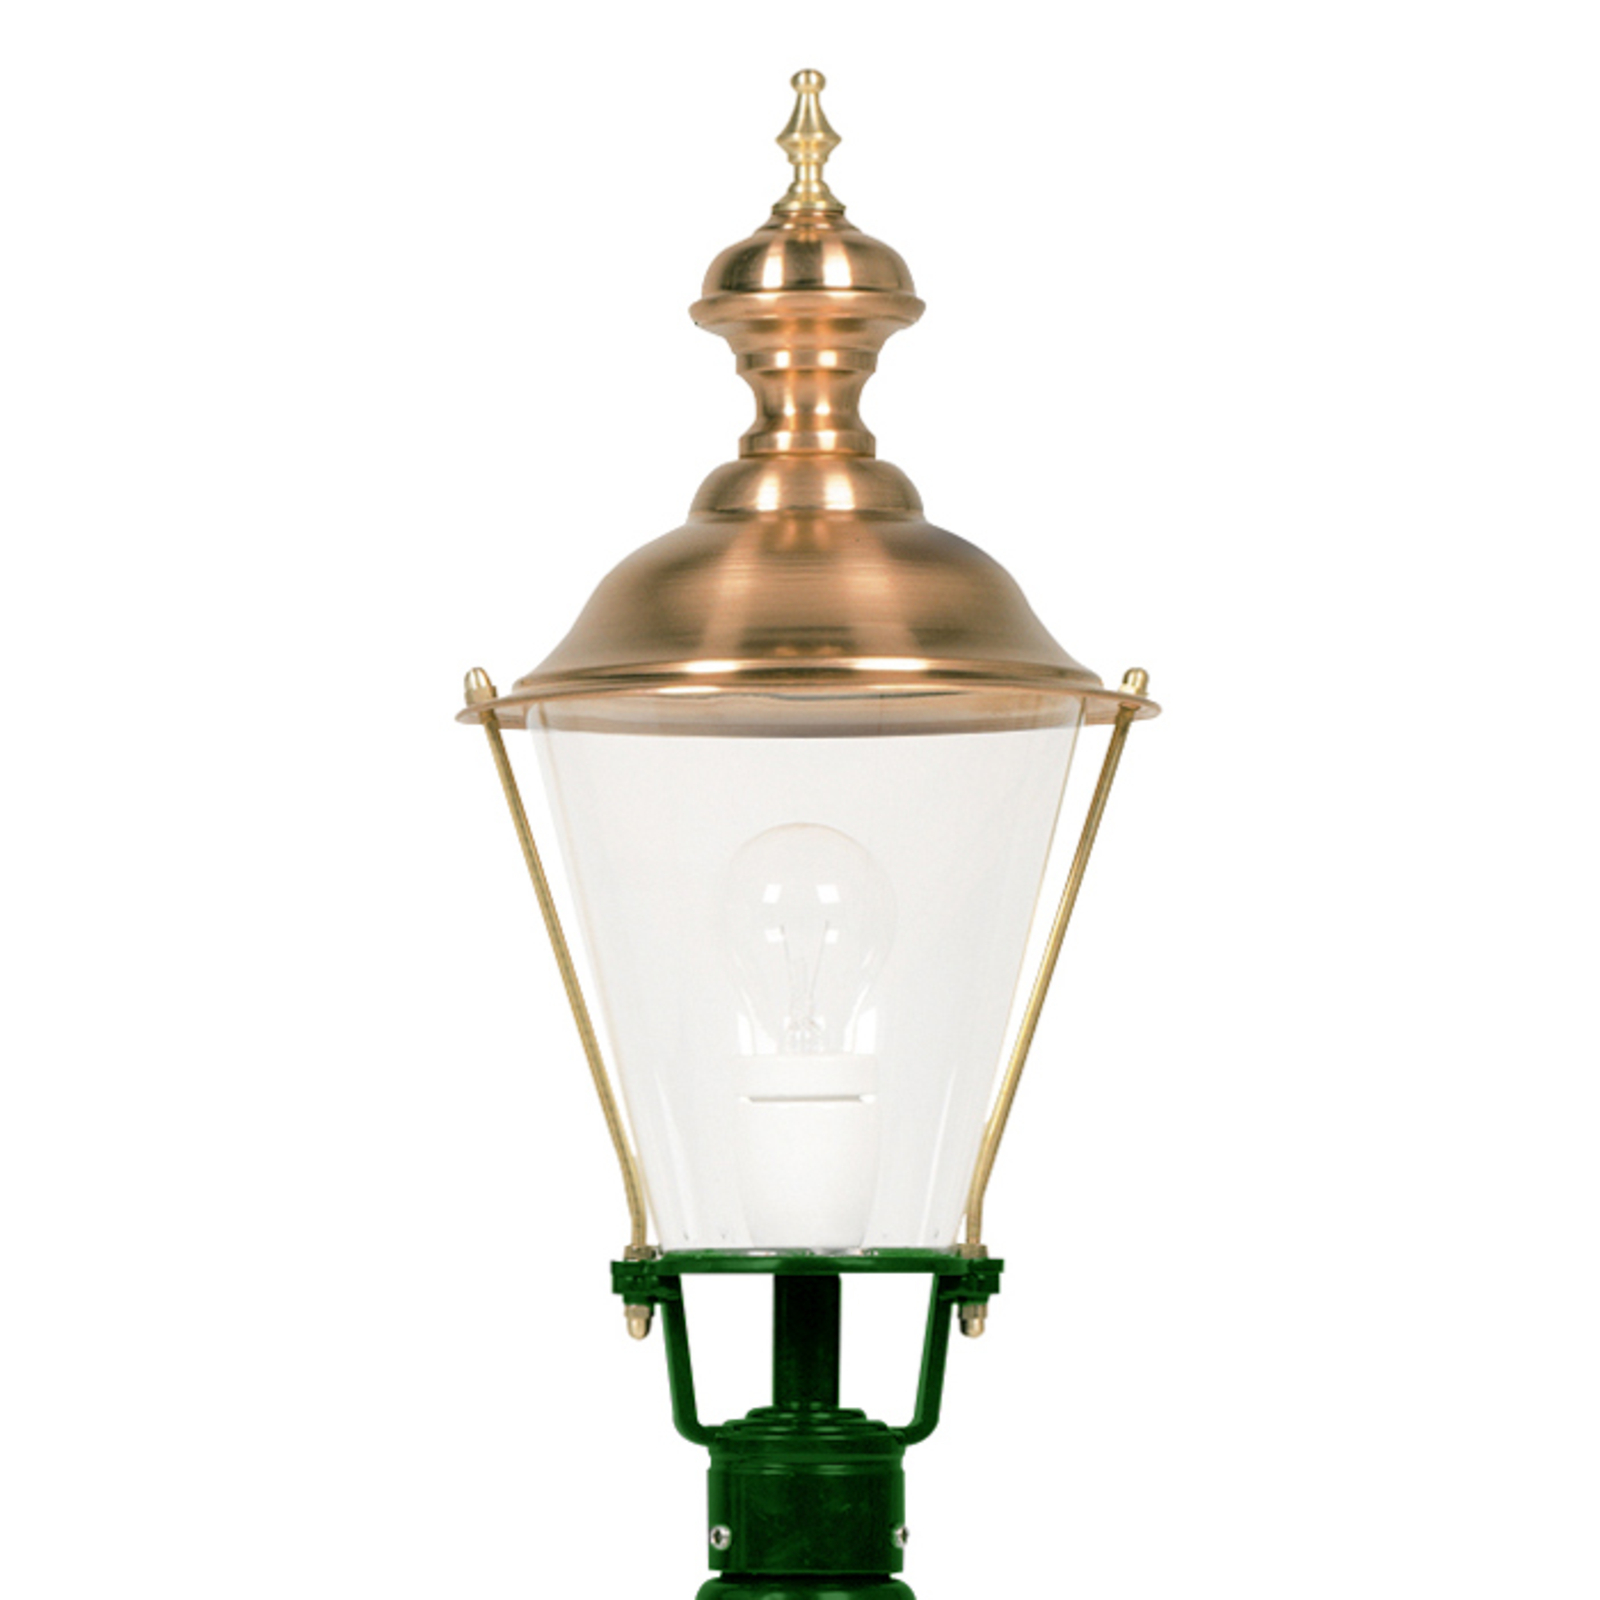 Atrakcyjna lampa na cokół M29, zielona